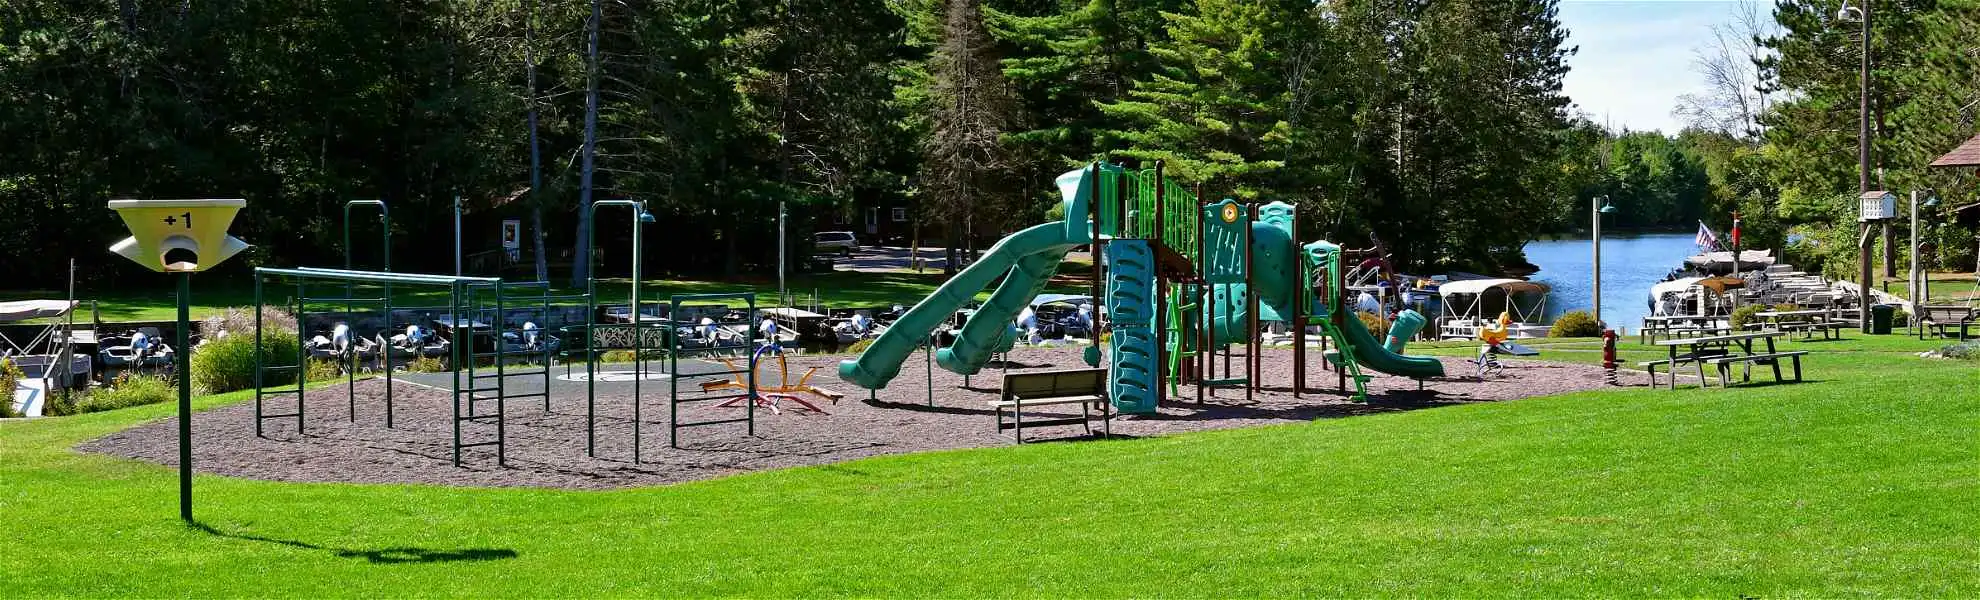 Playground at Treelands